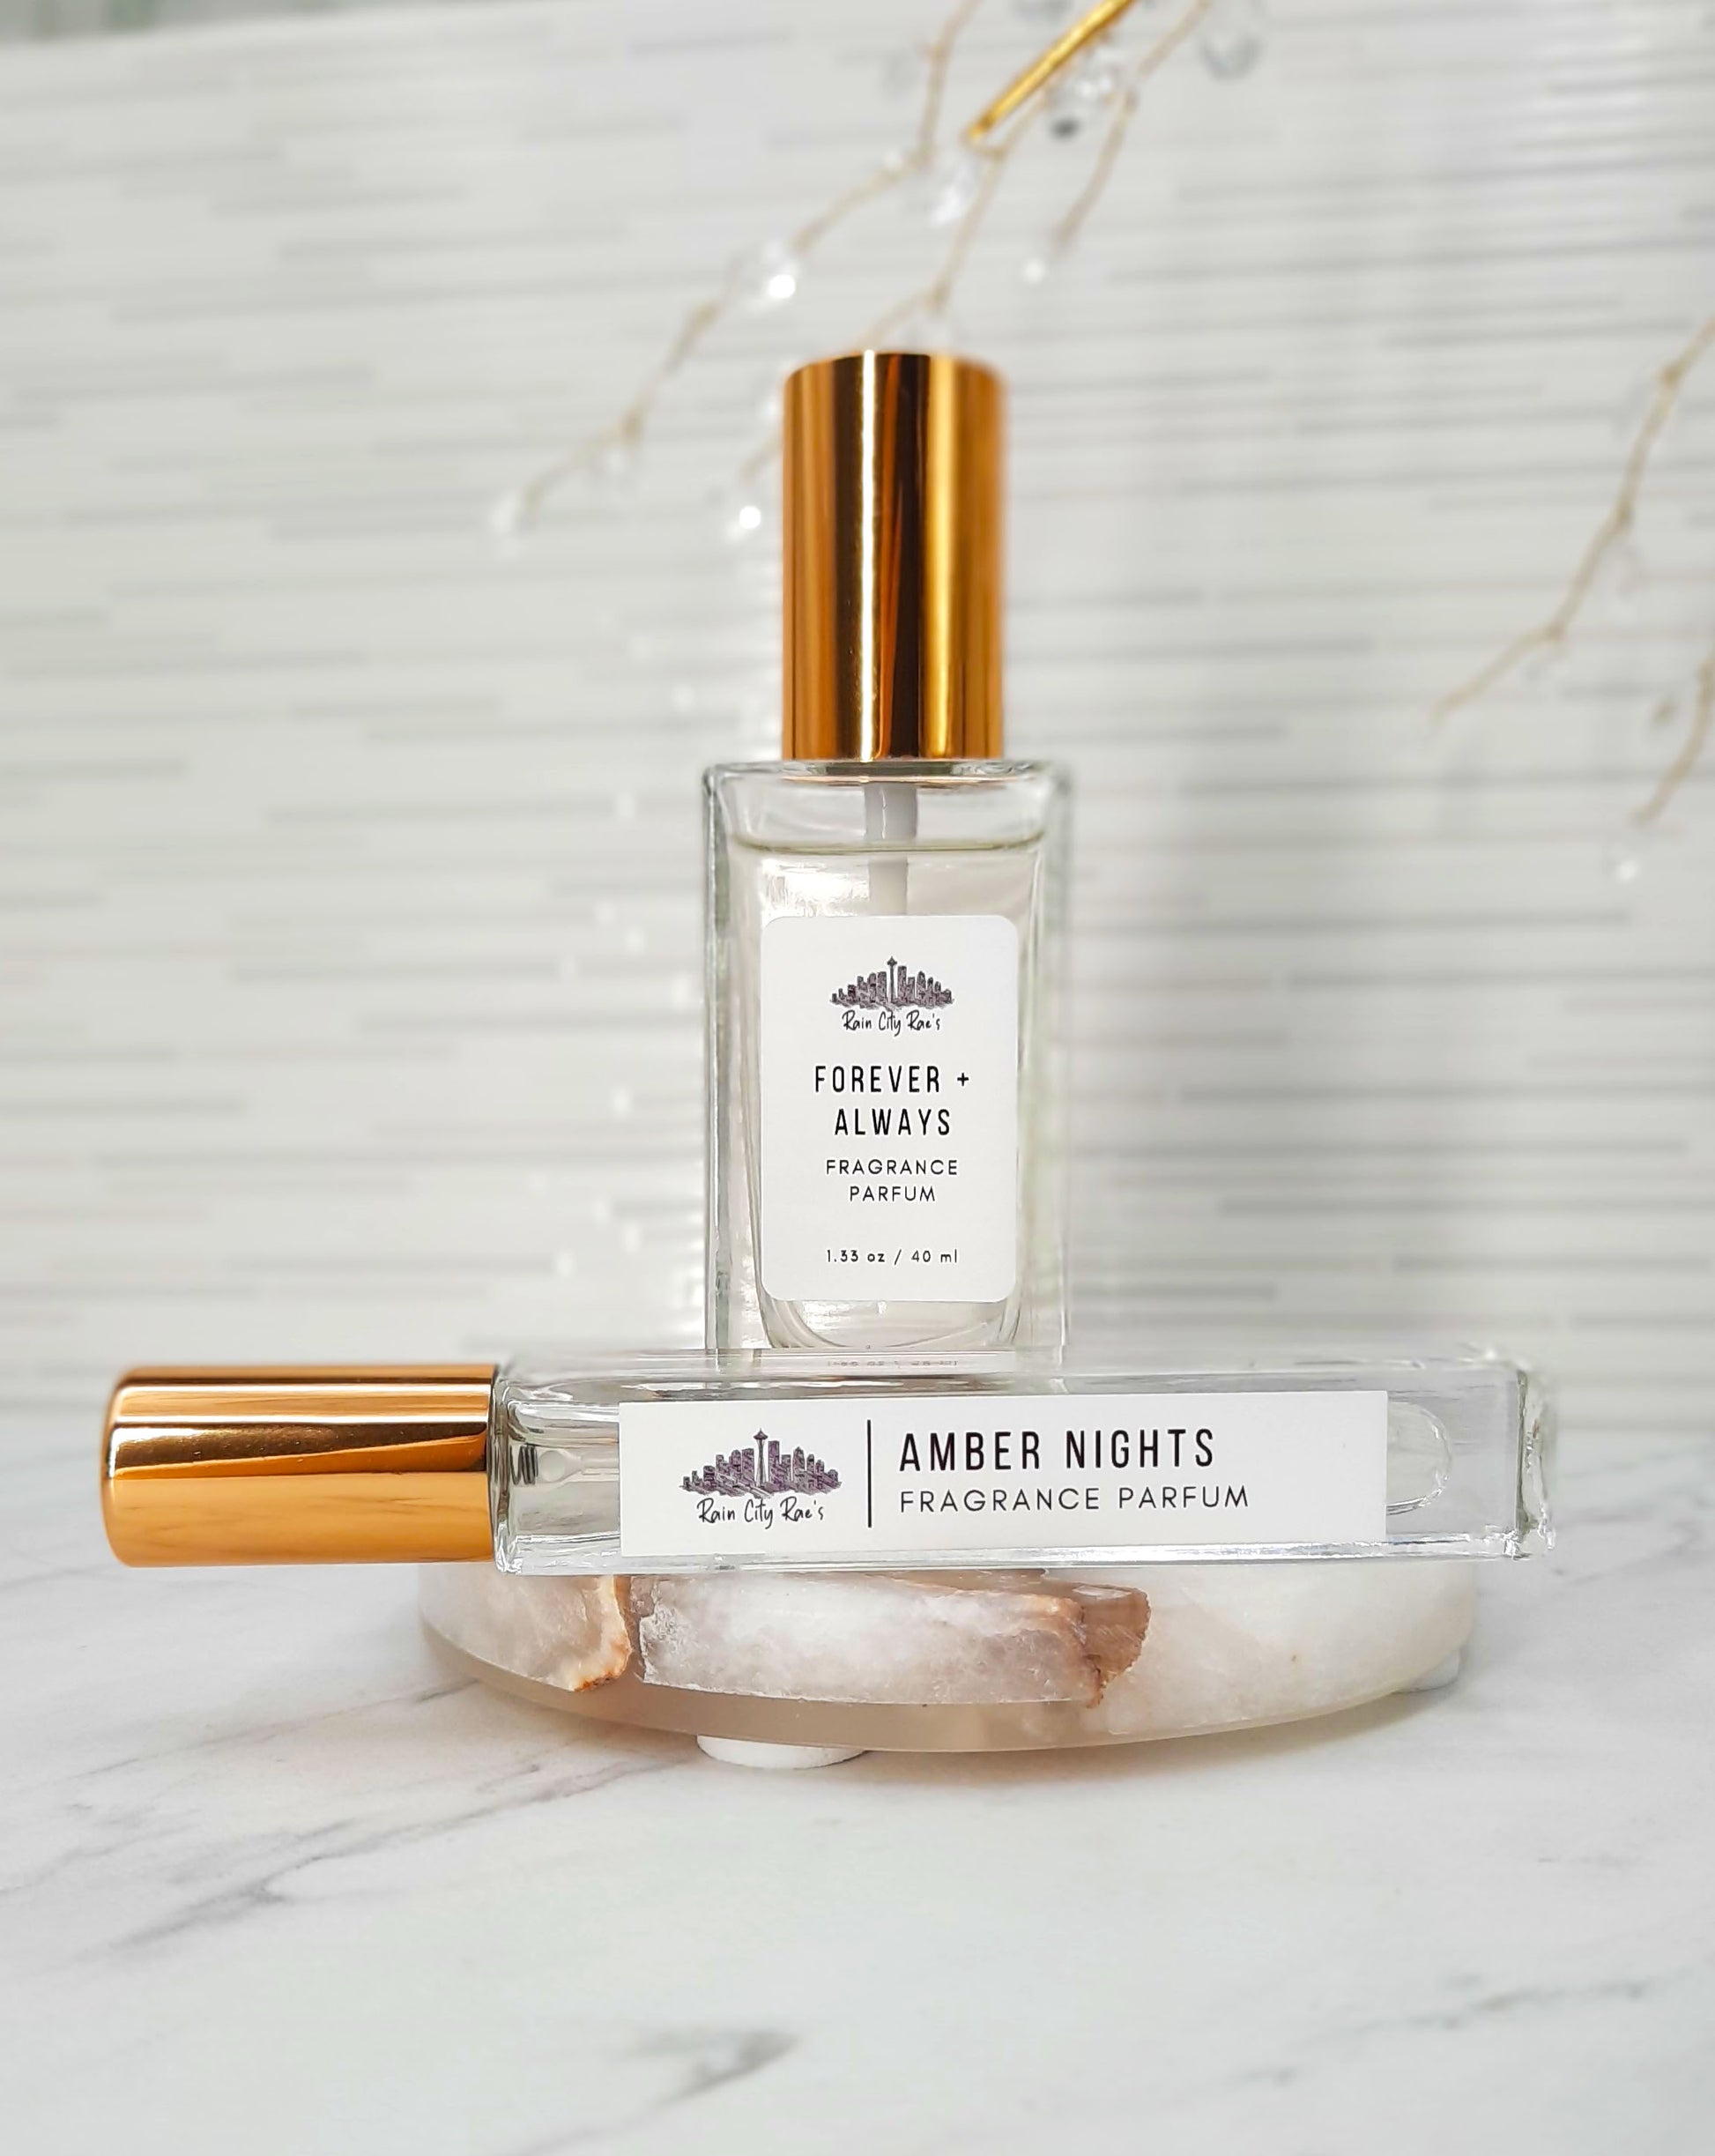 My Way Le Parfum by Giorgio Armani: A Refined Take